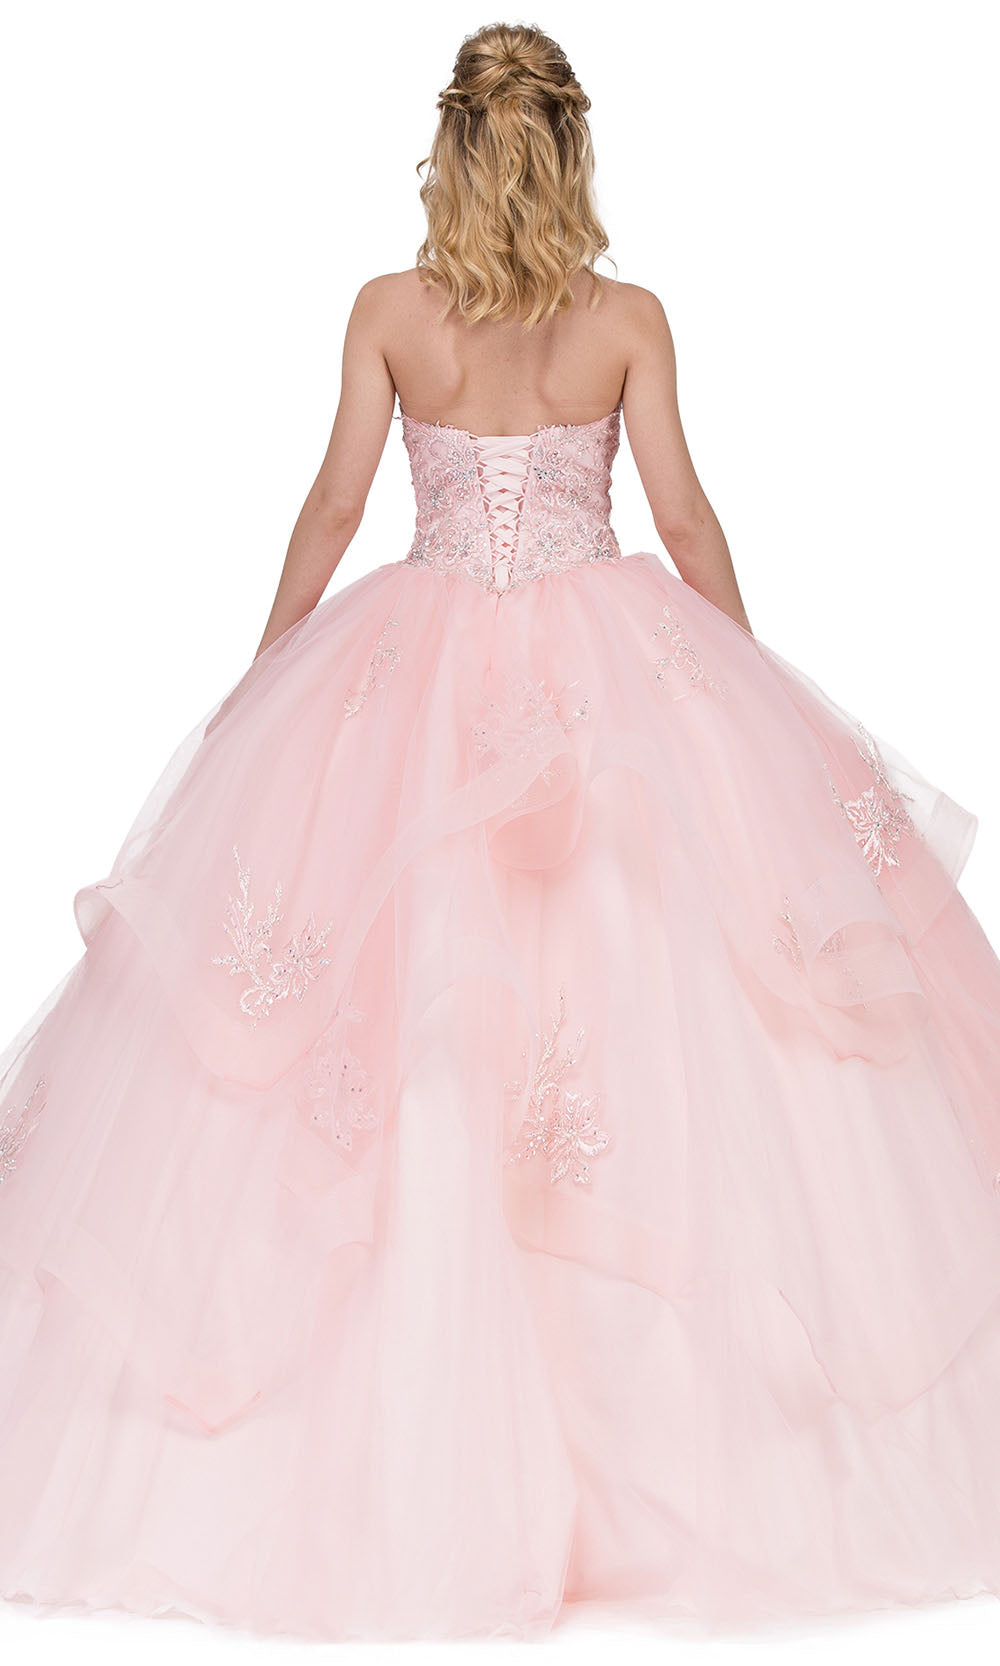 Dancing Queen - 1328 Sweetheart Embellished Ballgown In Pink